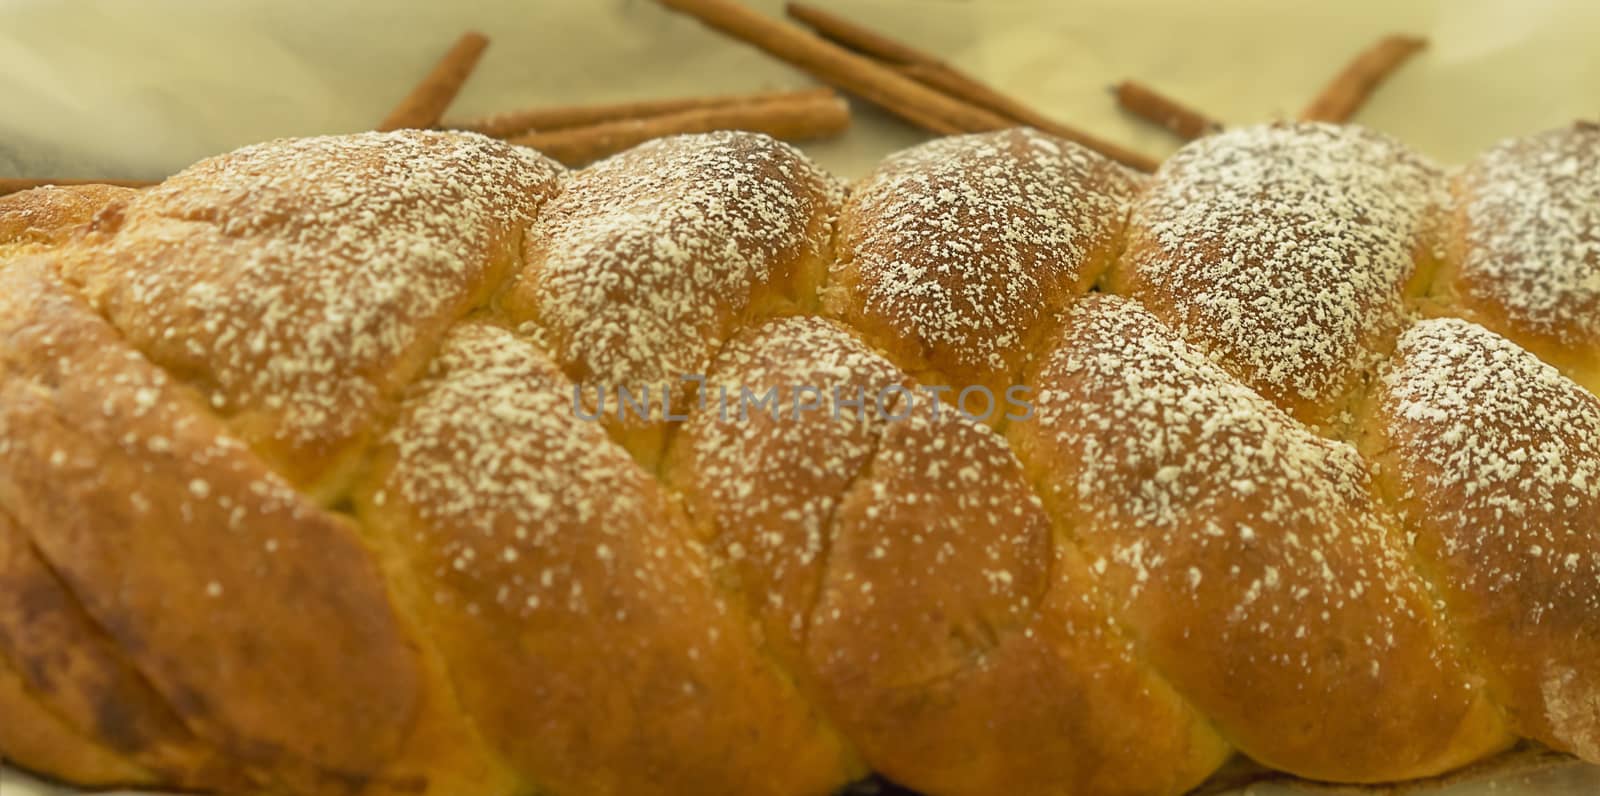 Fresh baked food delight, a crusty braided cinnamon bread twist dusted with icing sugar 